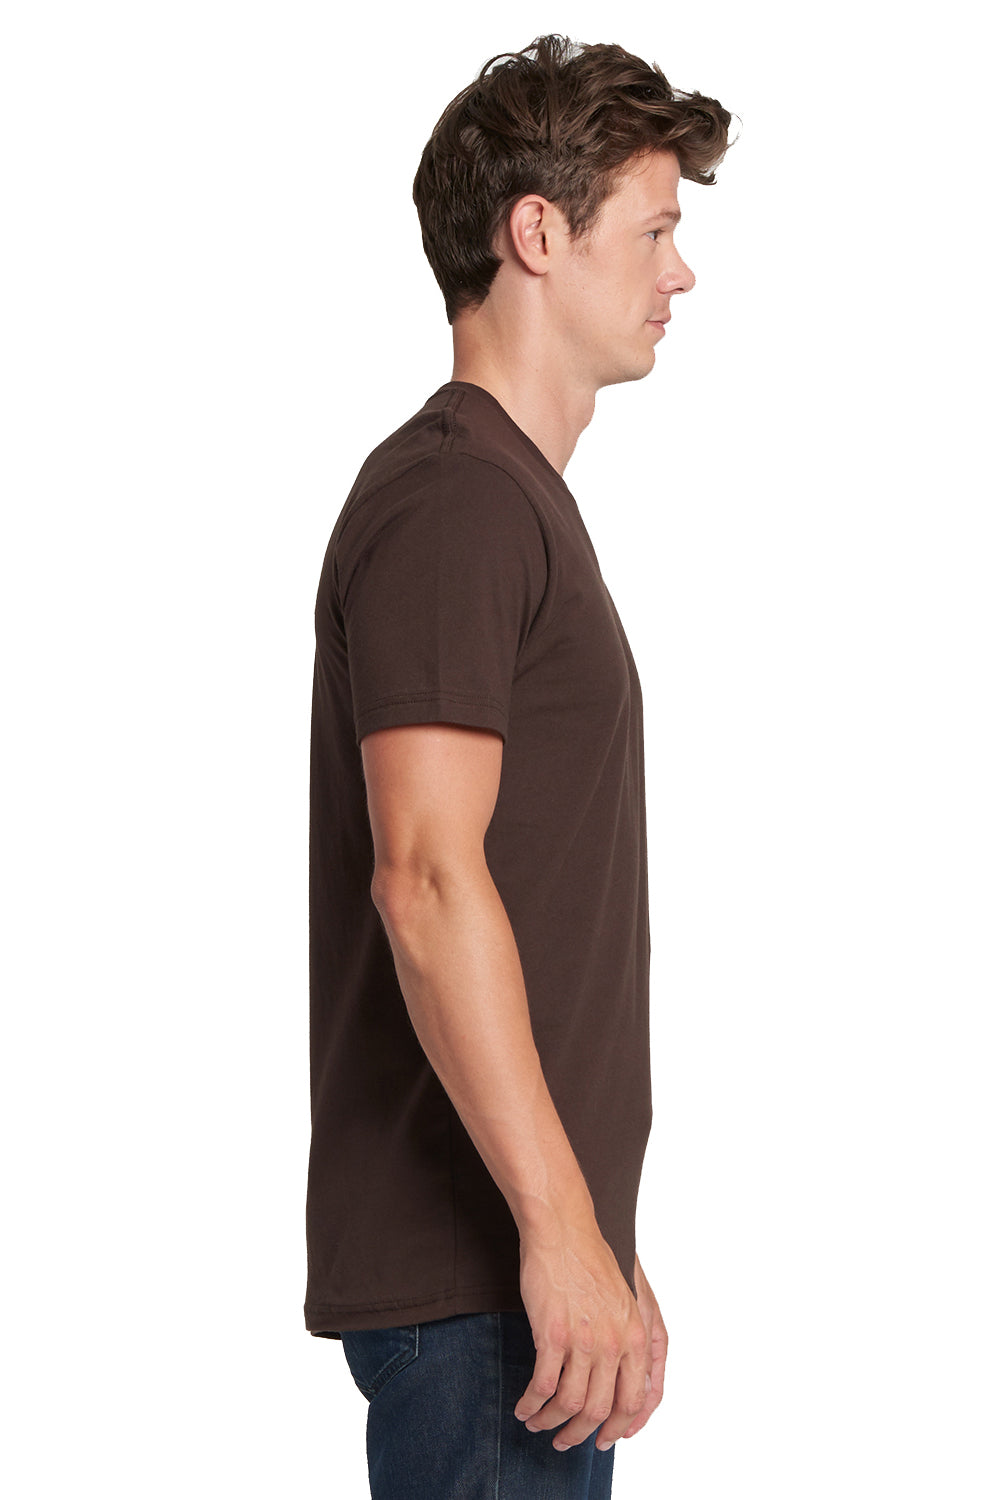 Next Level 3600 Mens Fine Jersey Short Sleeve Crewneck T-Shirt Chocolate Brown Side